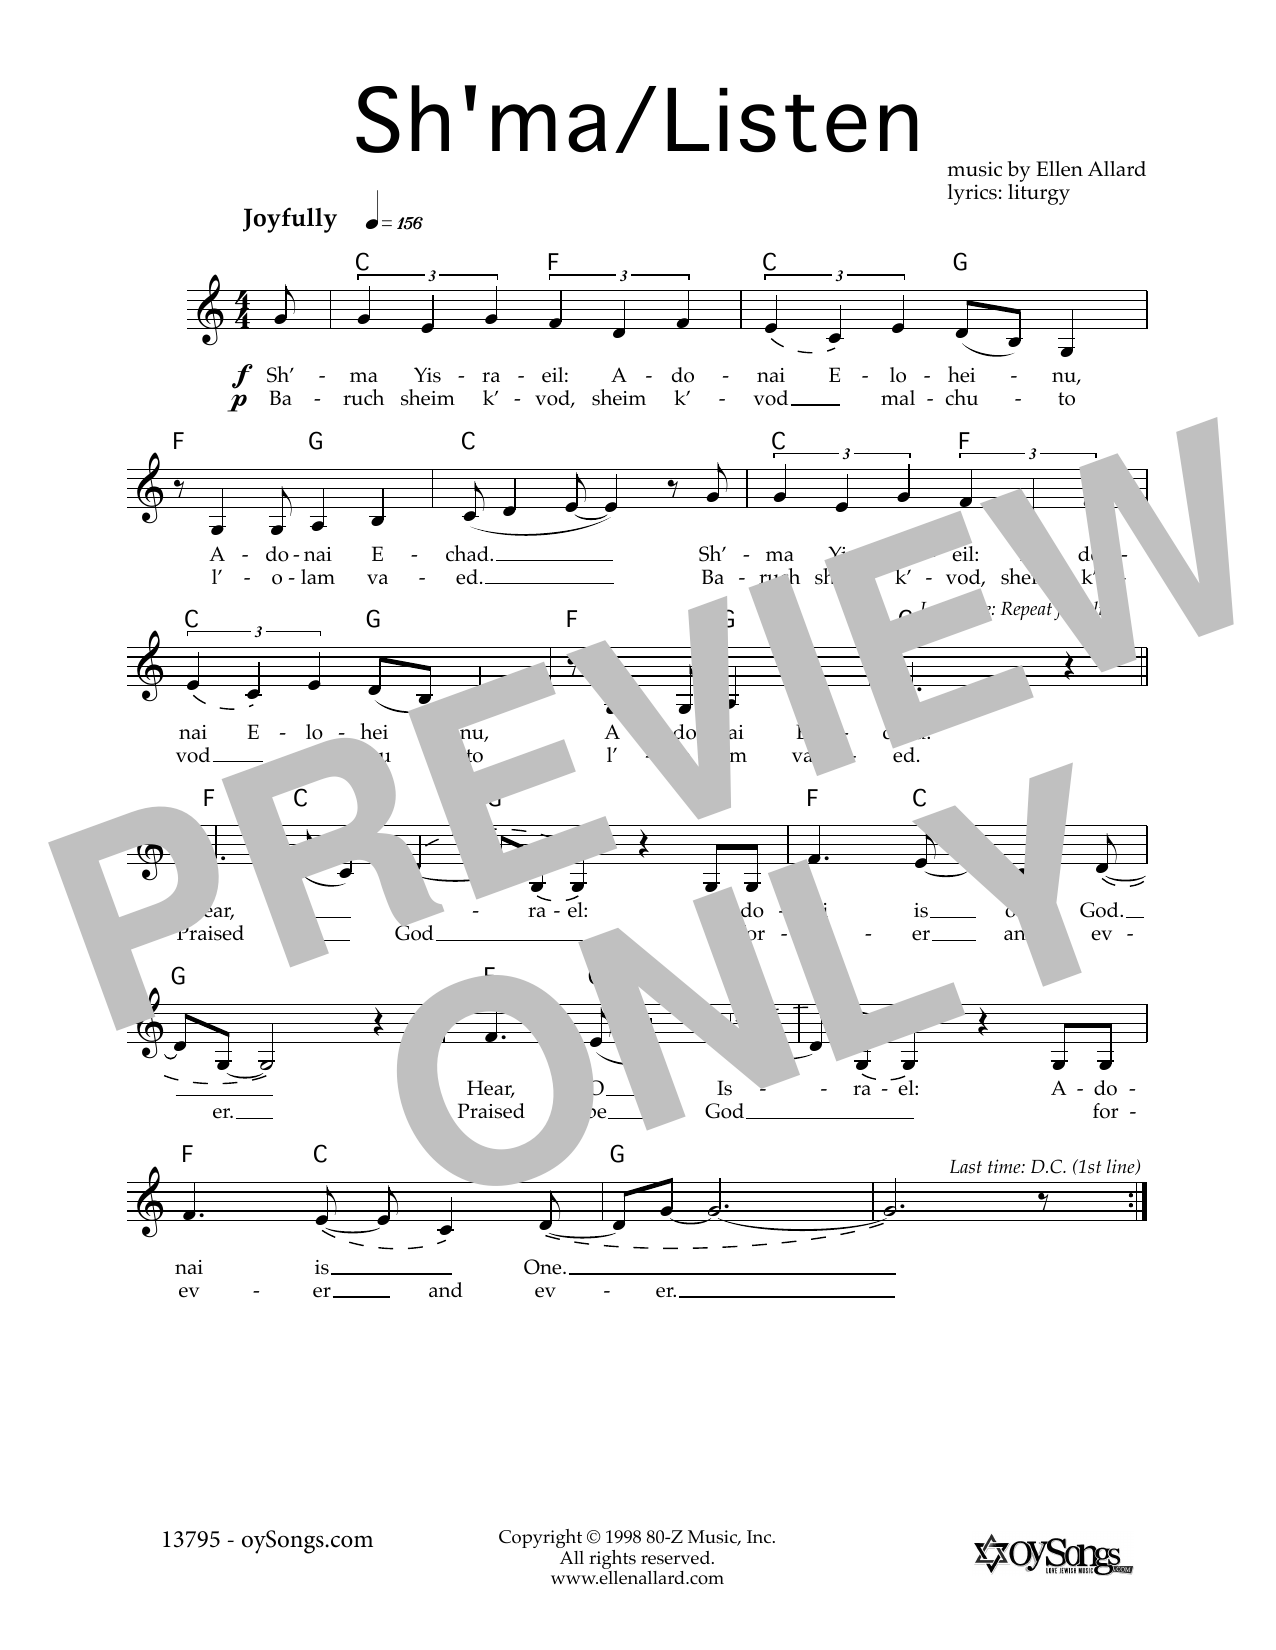 Download Ellen Allard Sh'ma-Listen Sheet Music and learn how to play Melody Line, Lyrics & Chords PDF digital score in minutes